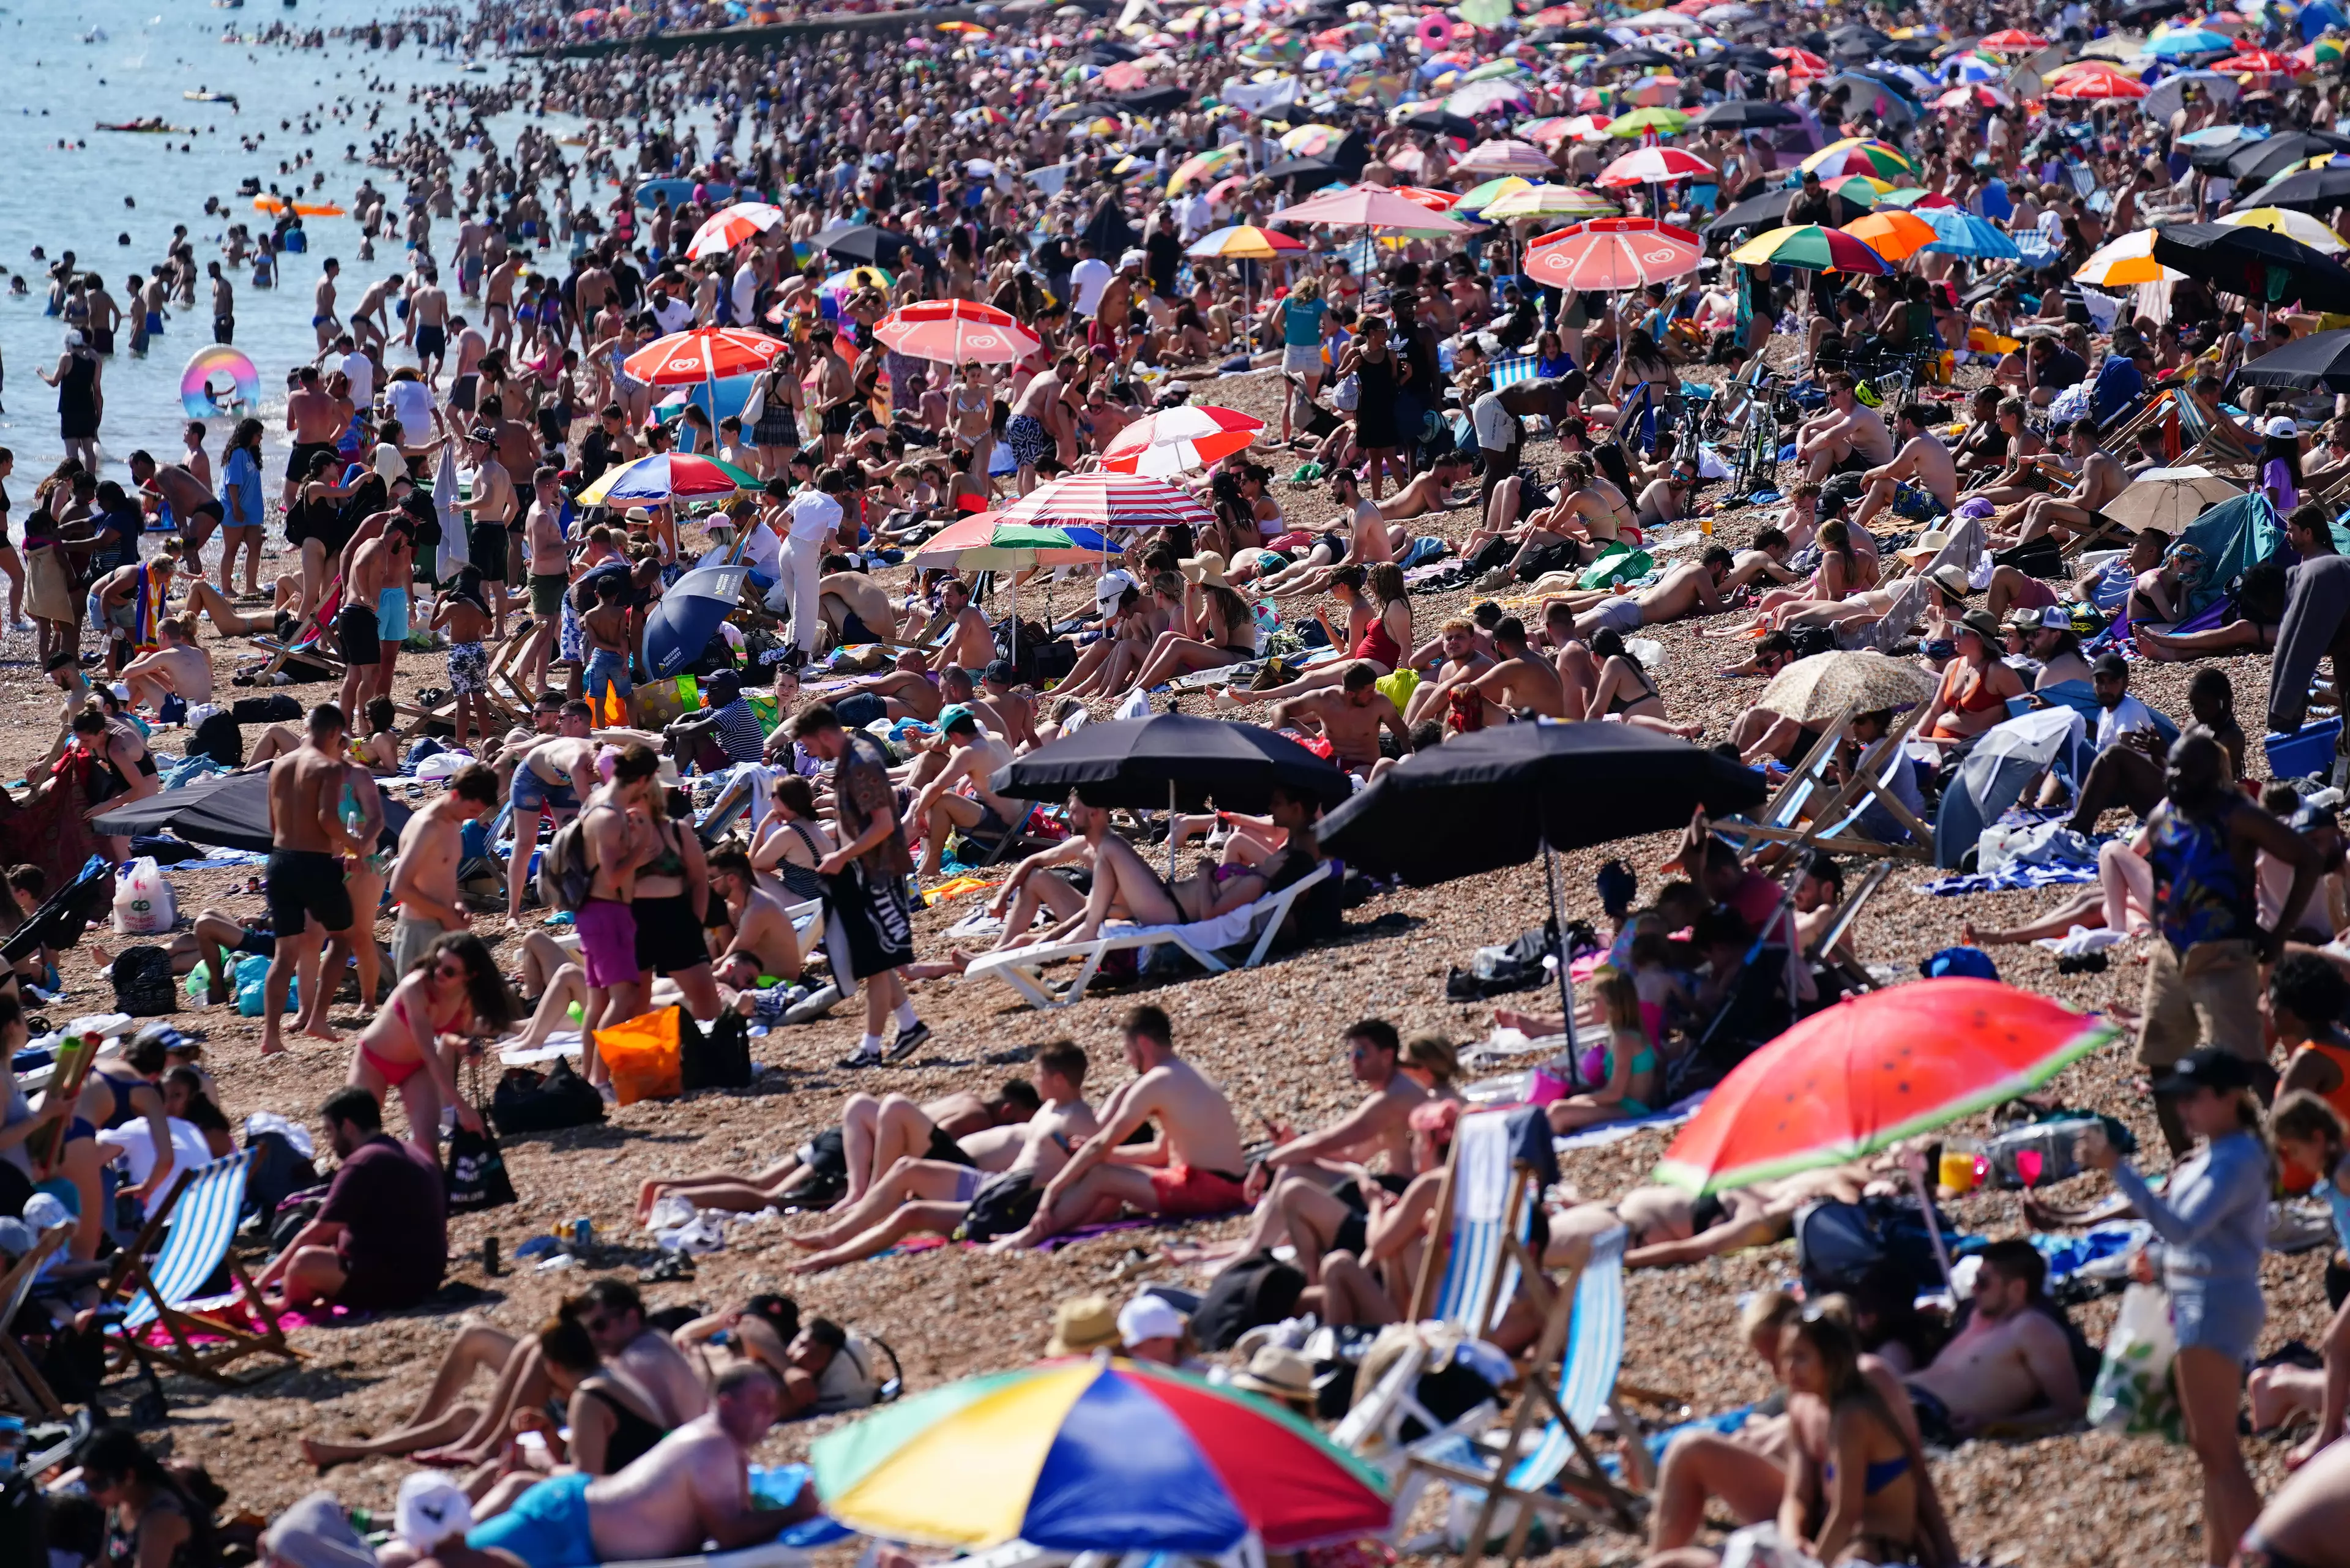 People enjoying the hot weather in Brighton on Sunday.